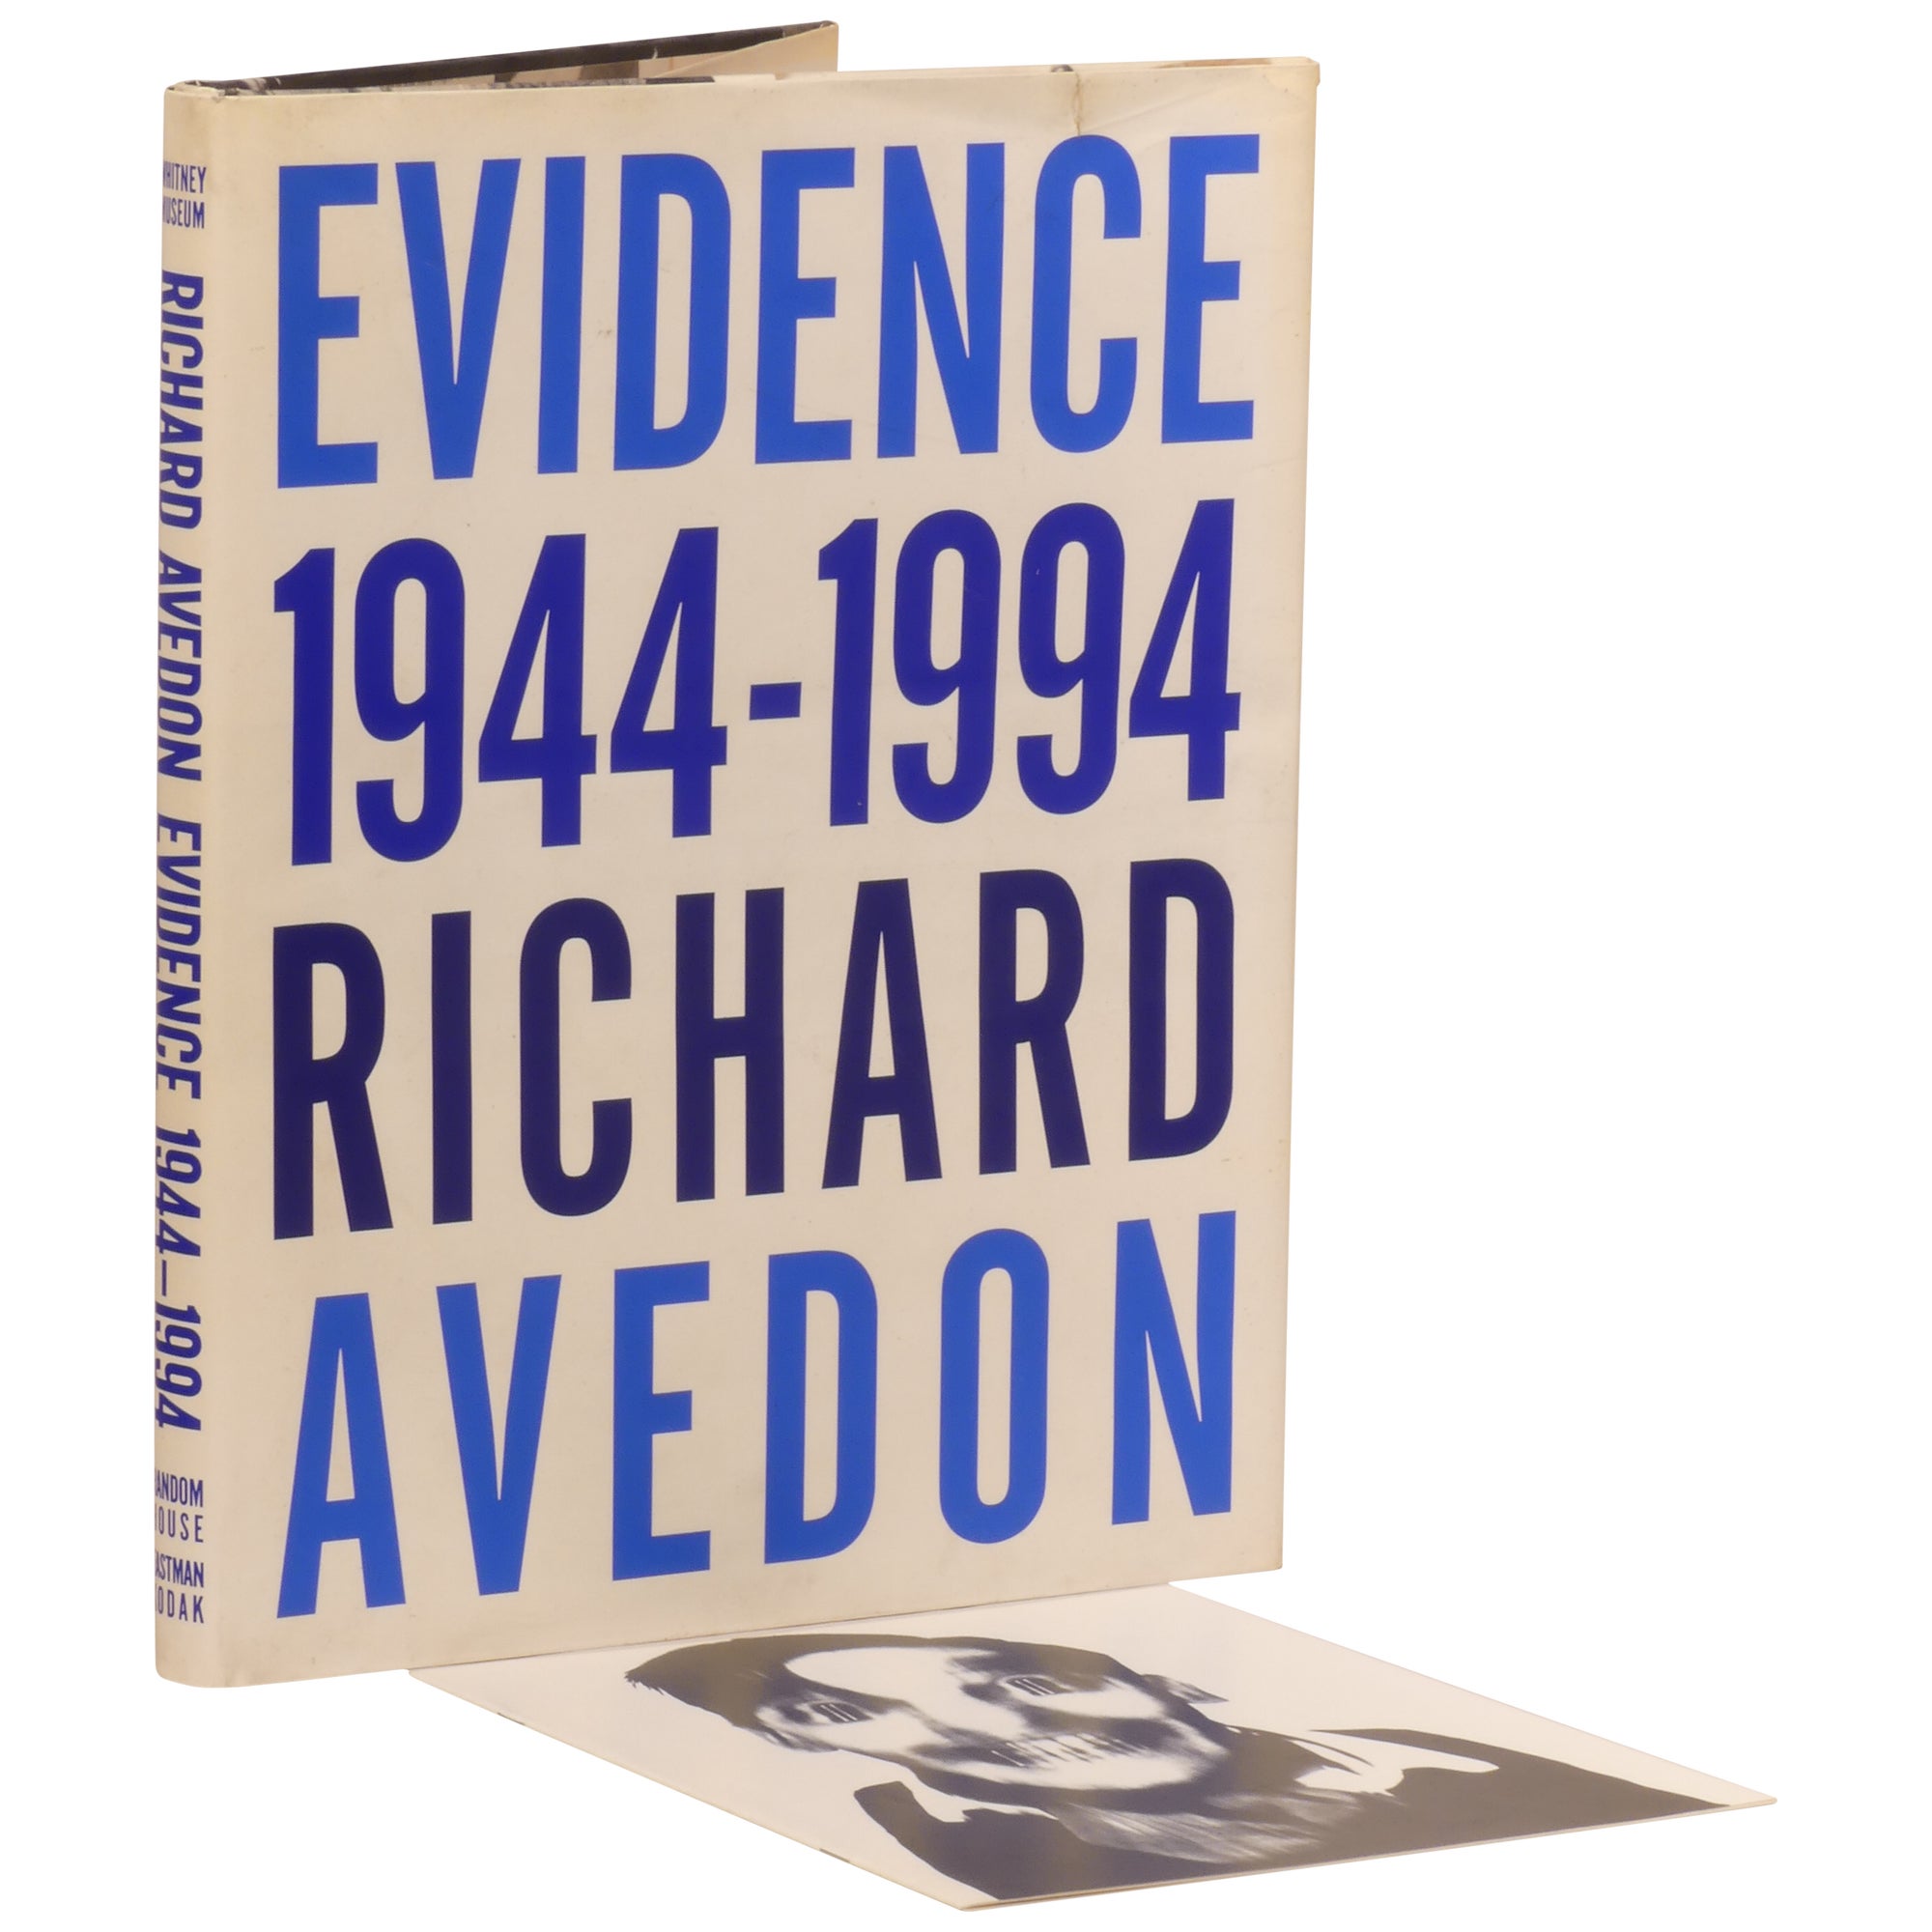 Evidence 1944-1994 by Richard Avedon, Jane Livingston, Adam Gopnik on  Downtown Brown Books